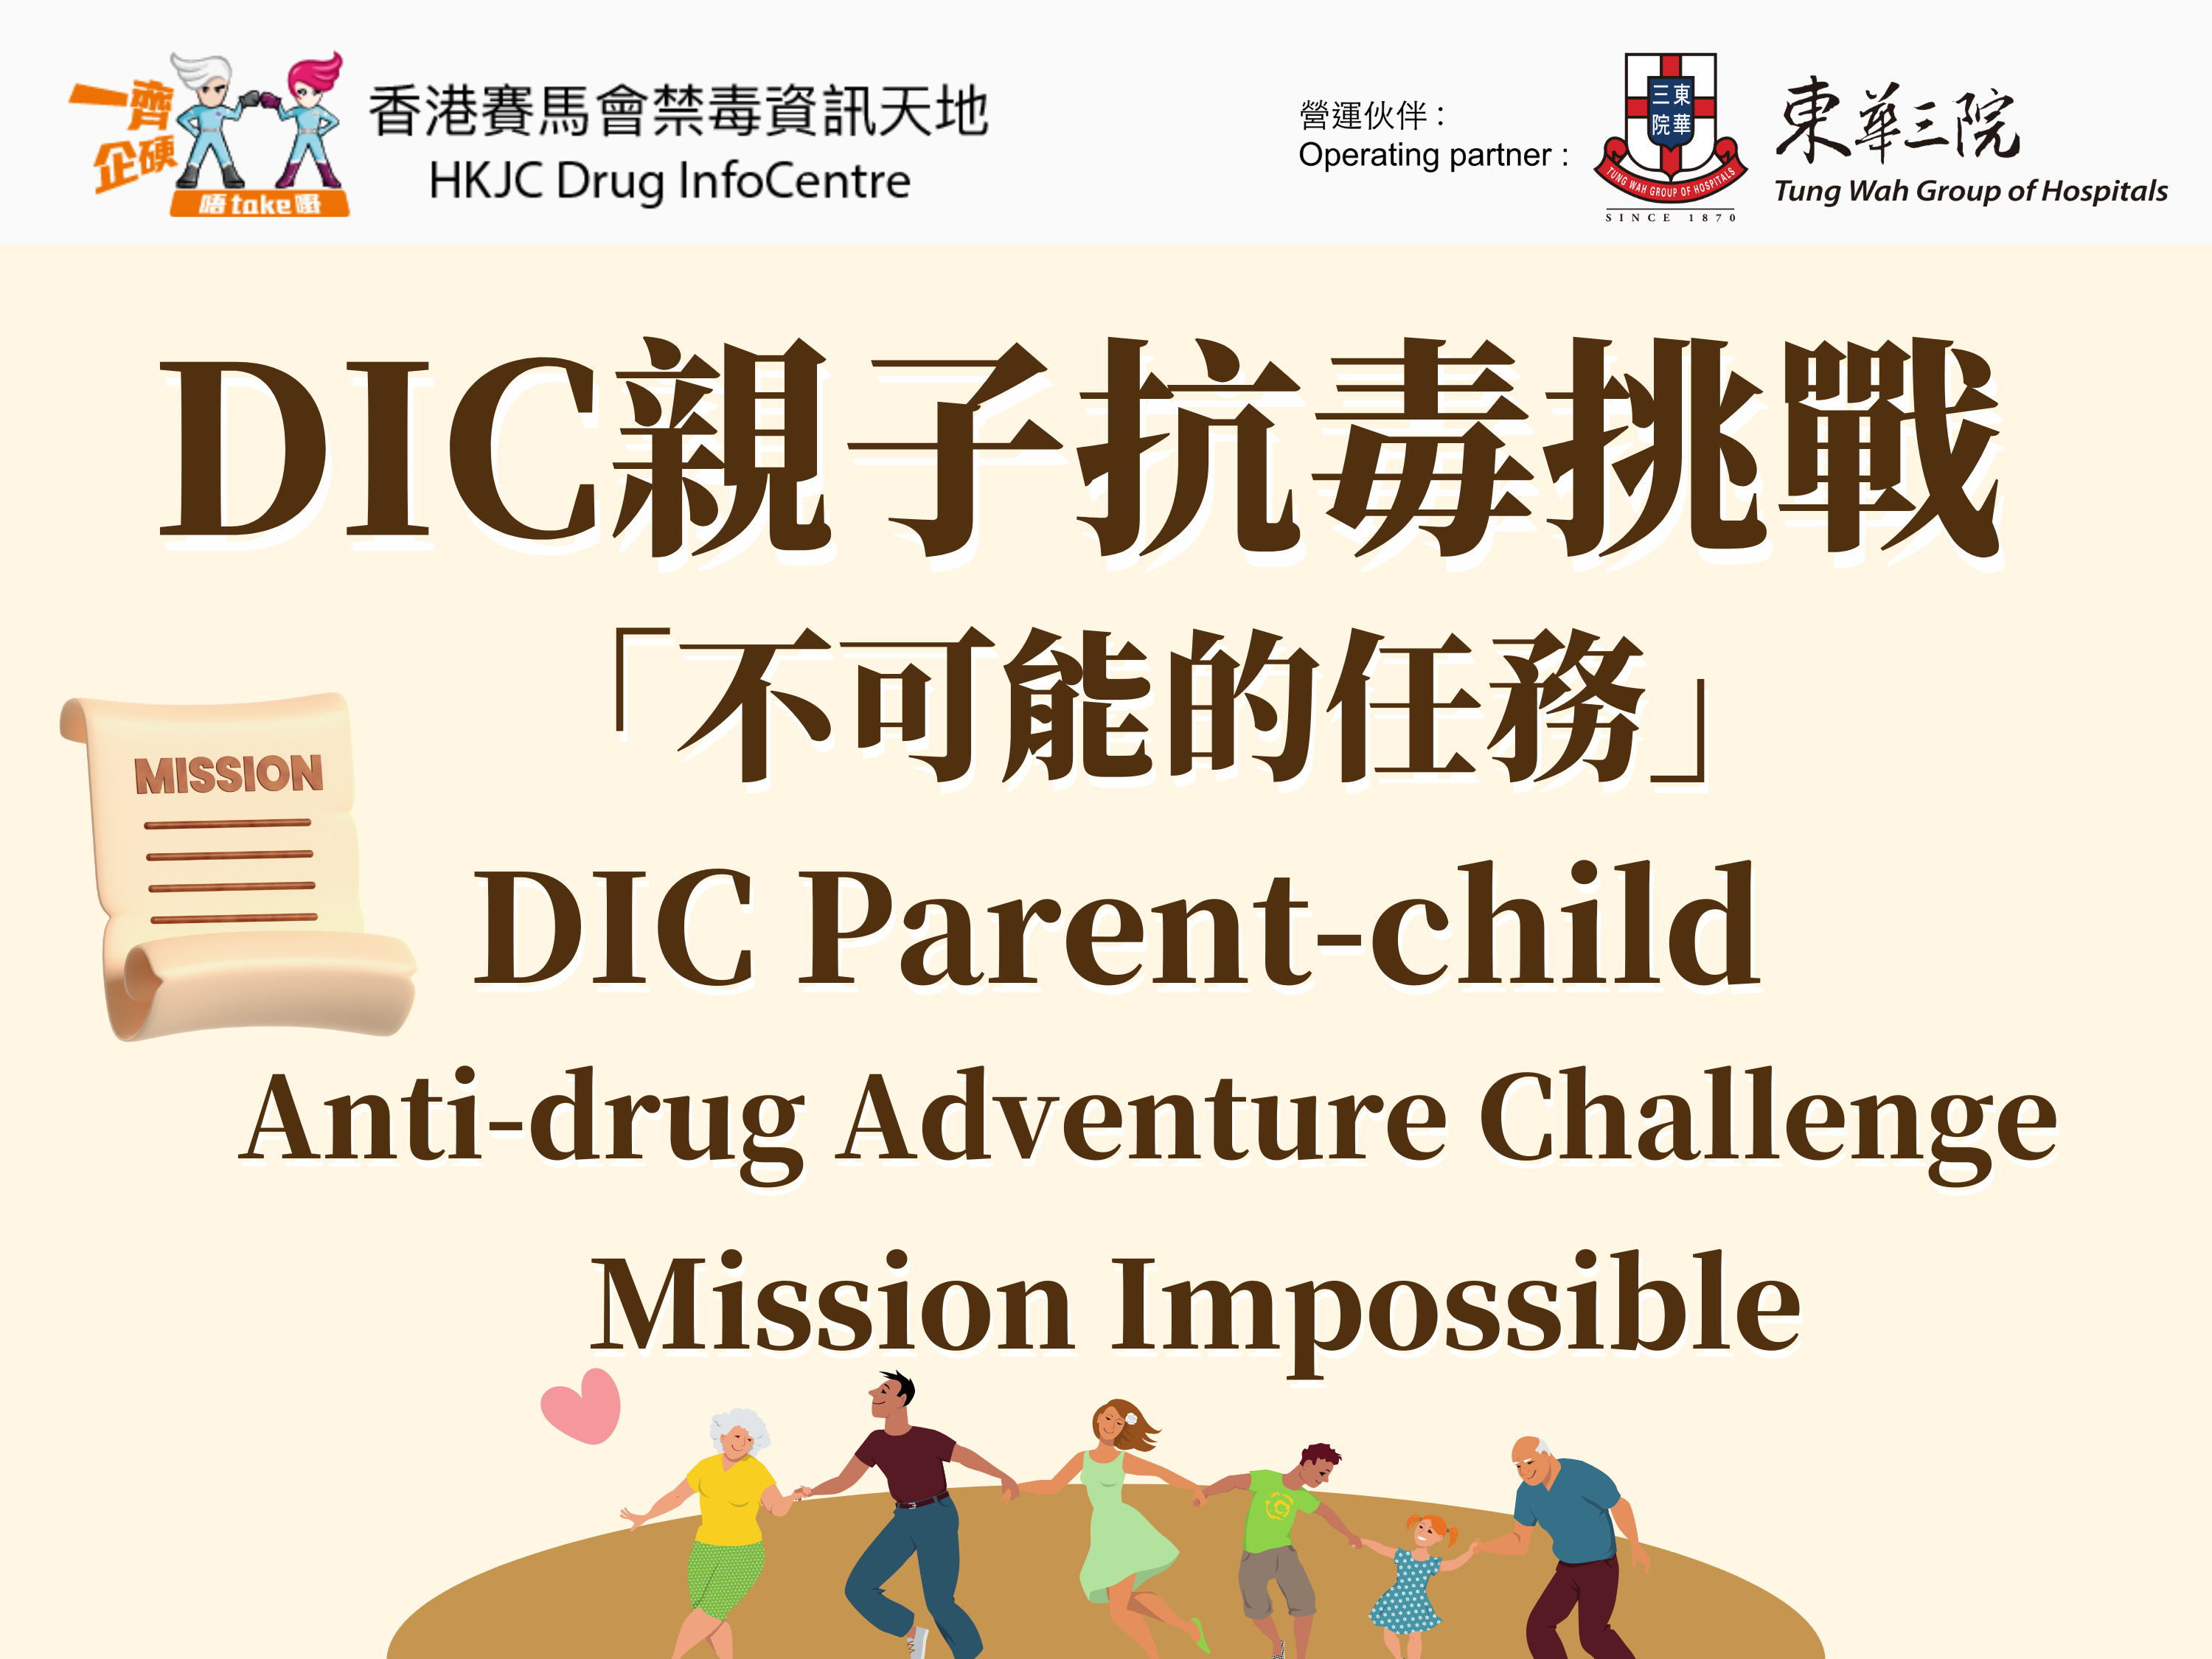 DIC Parent-child Anti-drug Adventure Challenge: Mission Impossible 